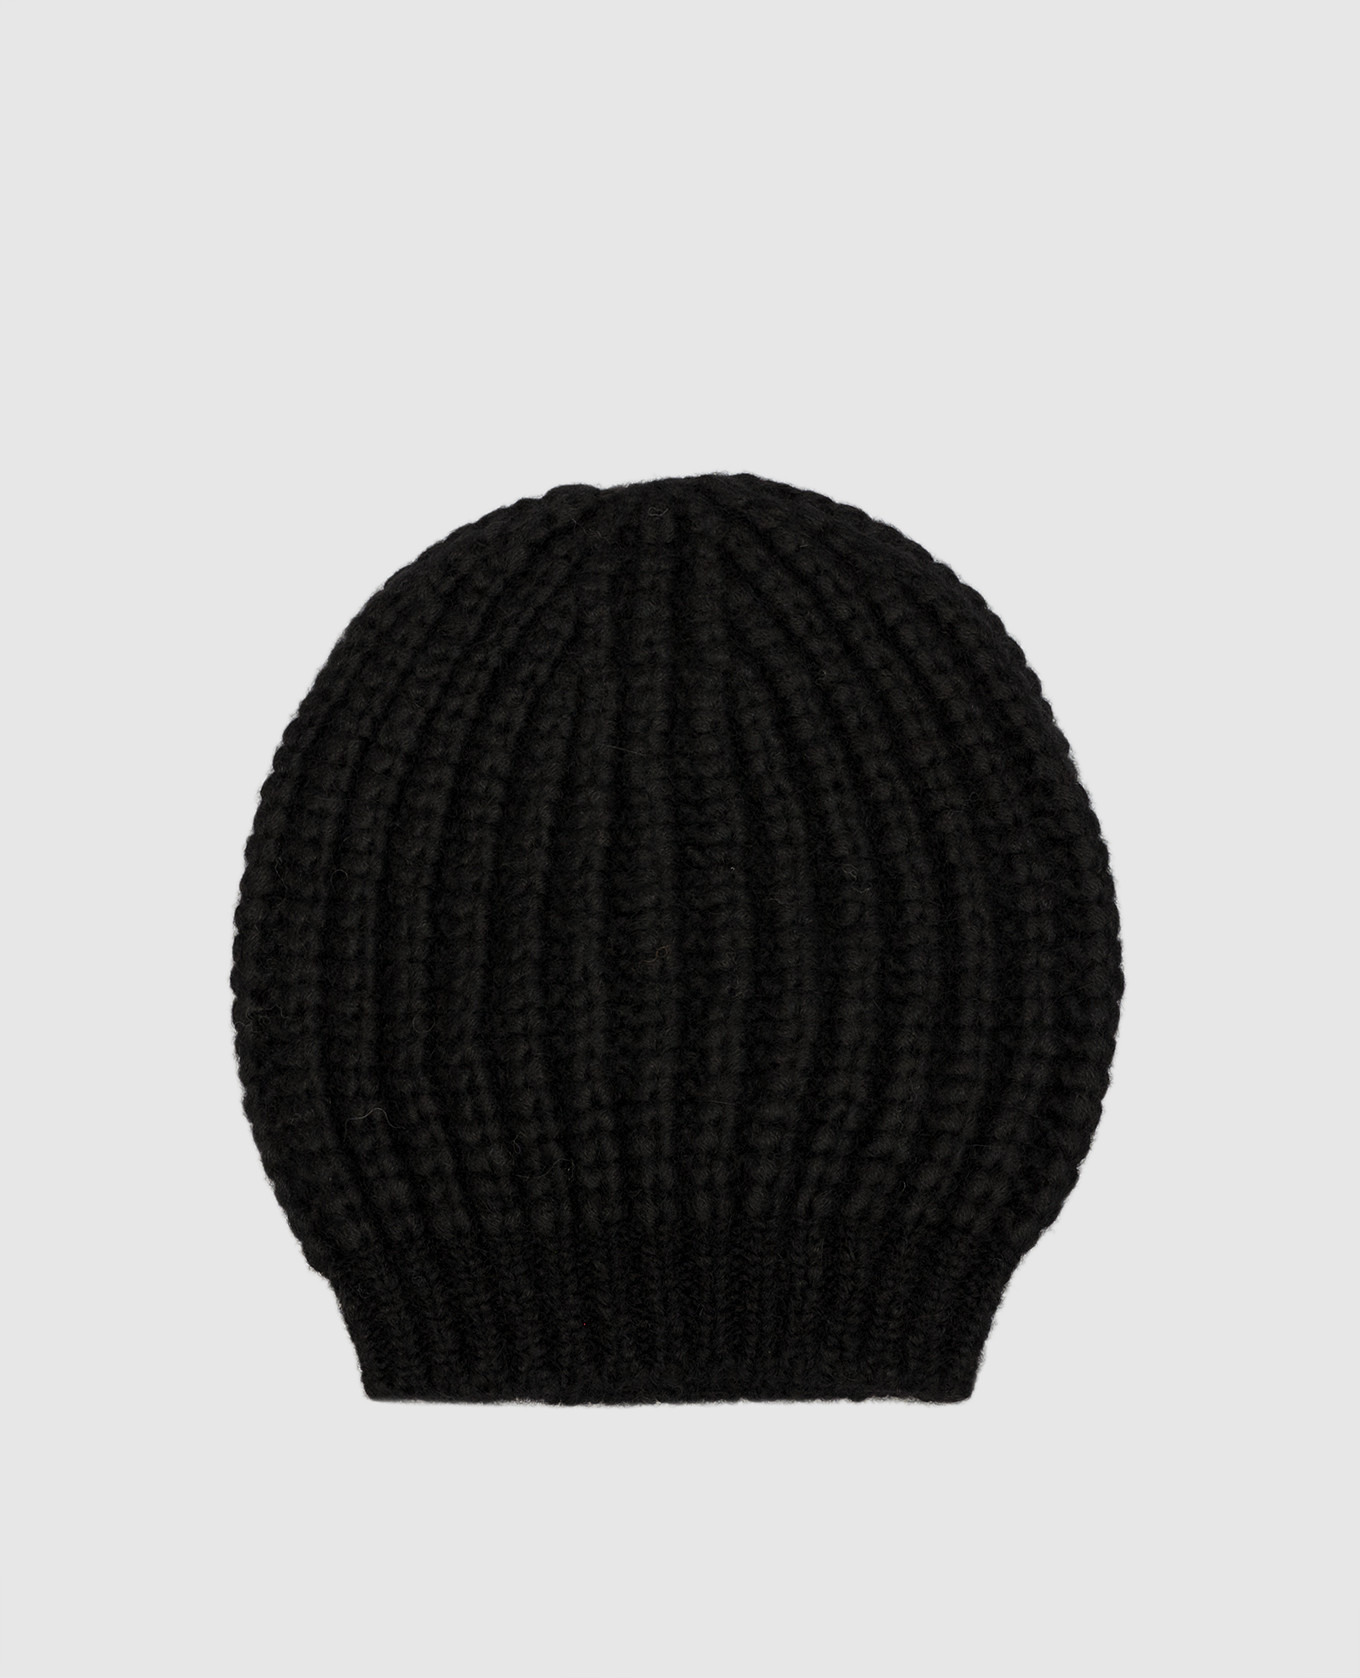 Black cap in a textured pattern